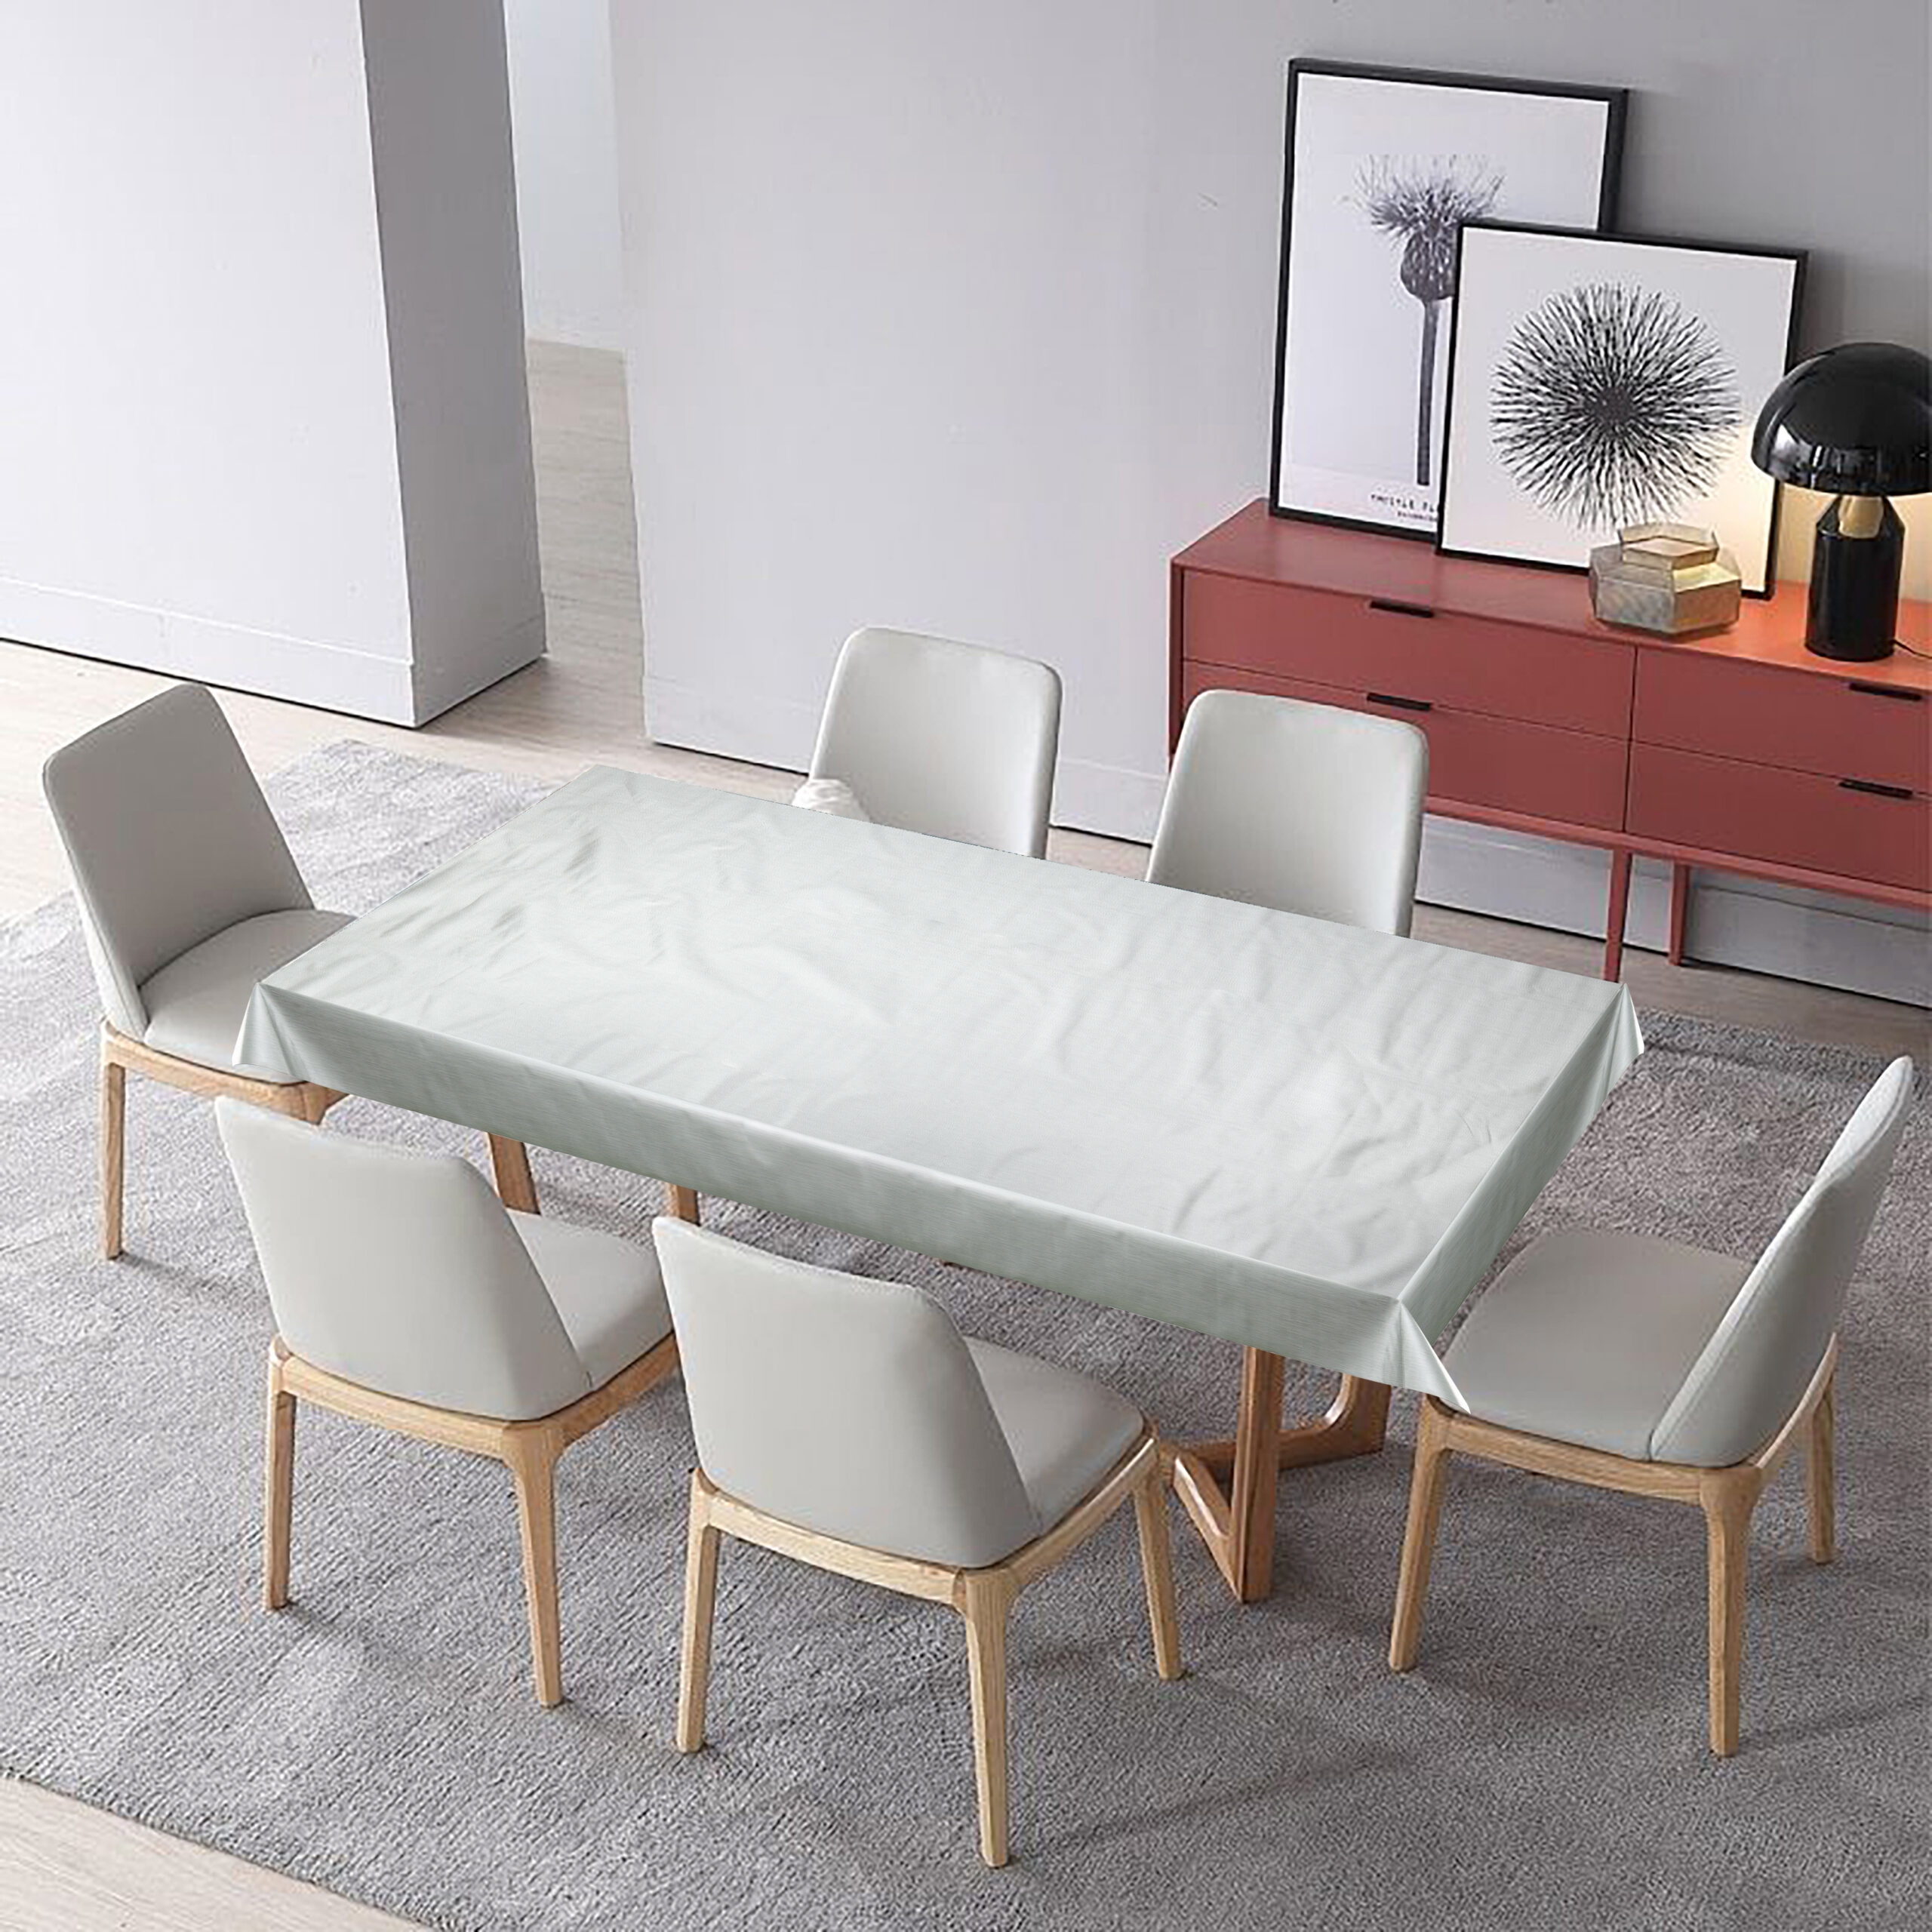 مفرش طاولة (غطاء) 1.37 × 2 متر - فضي Royalford Brushed Metallic Silver Finish Table Cloth